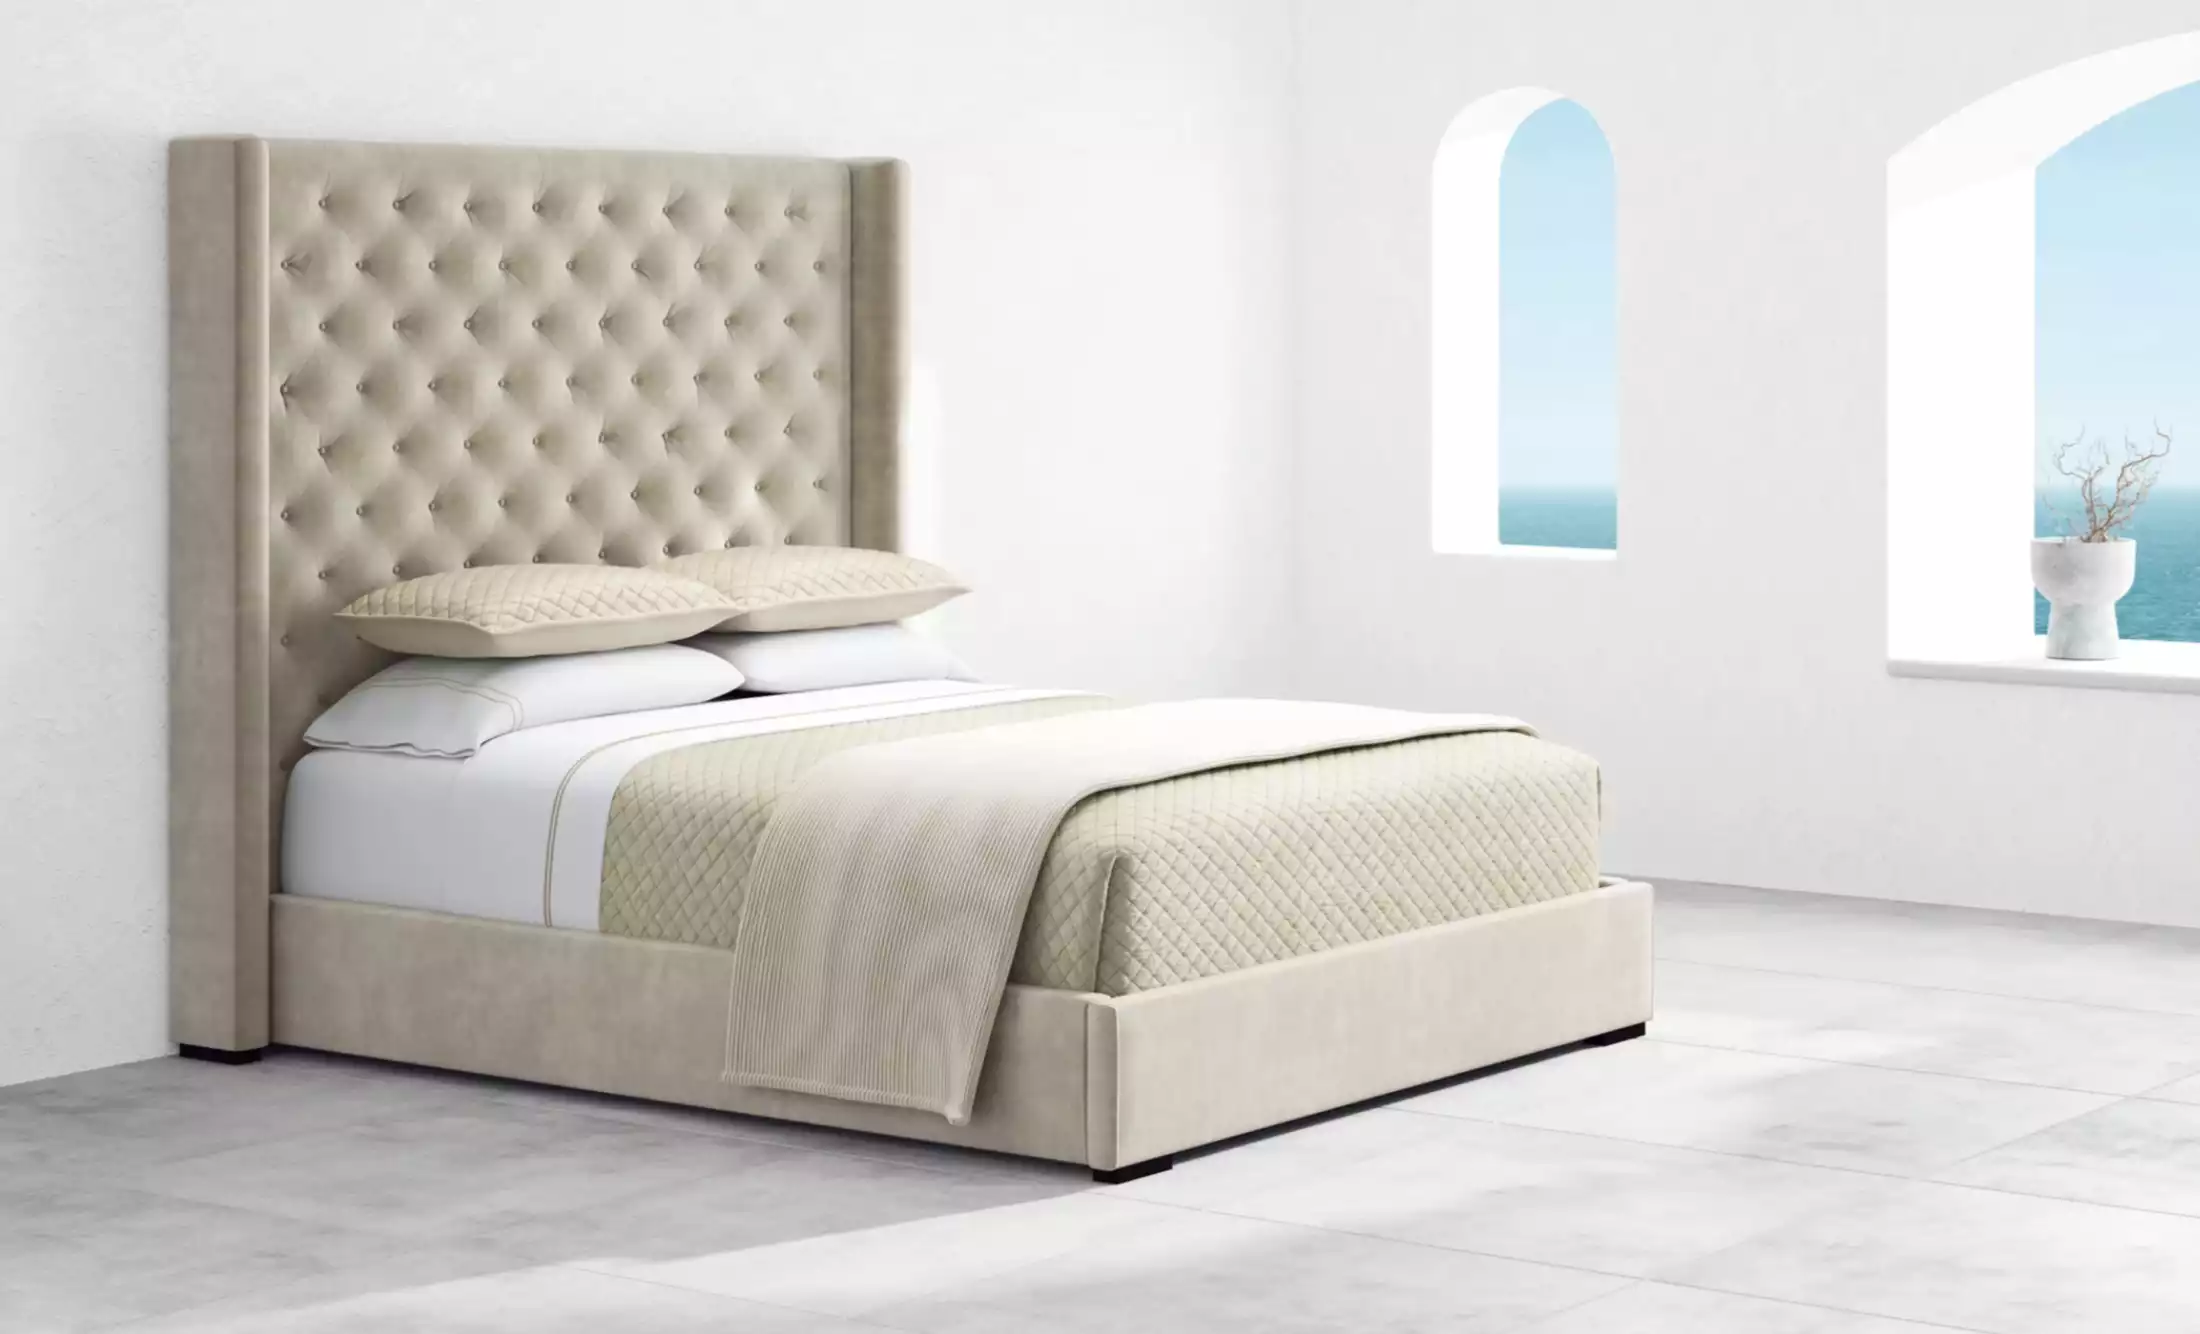 The Amalfi Bed